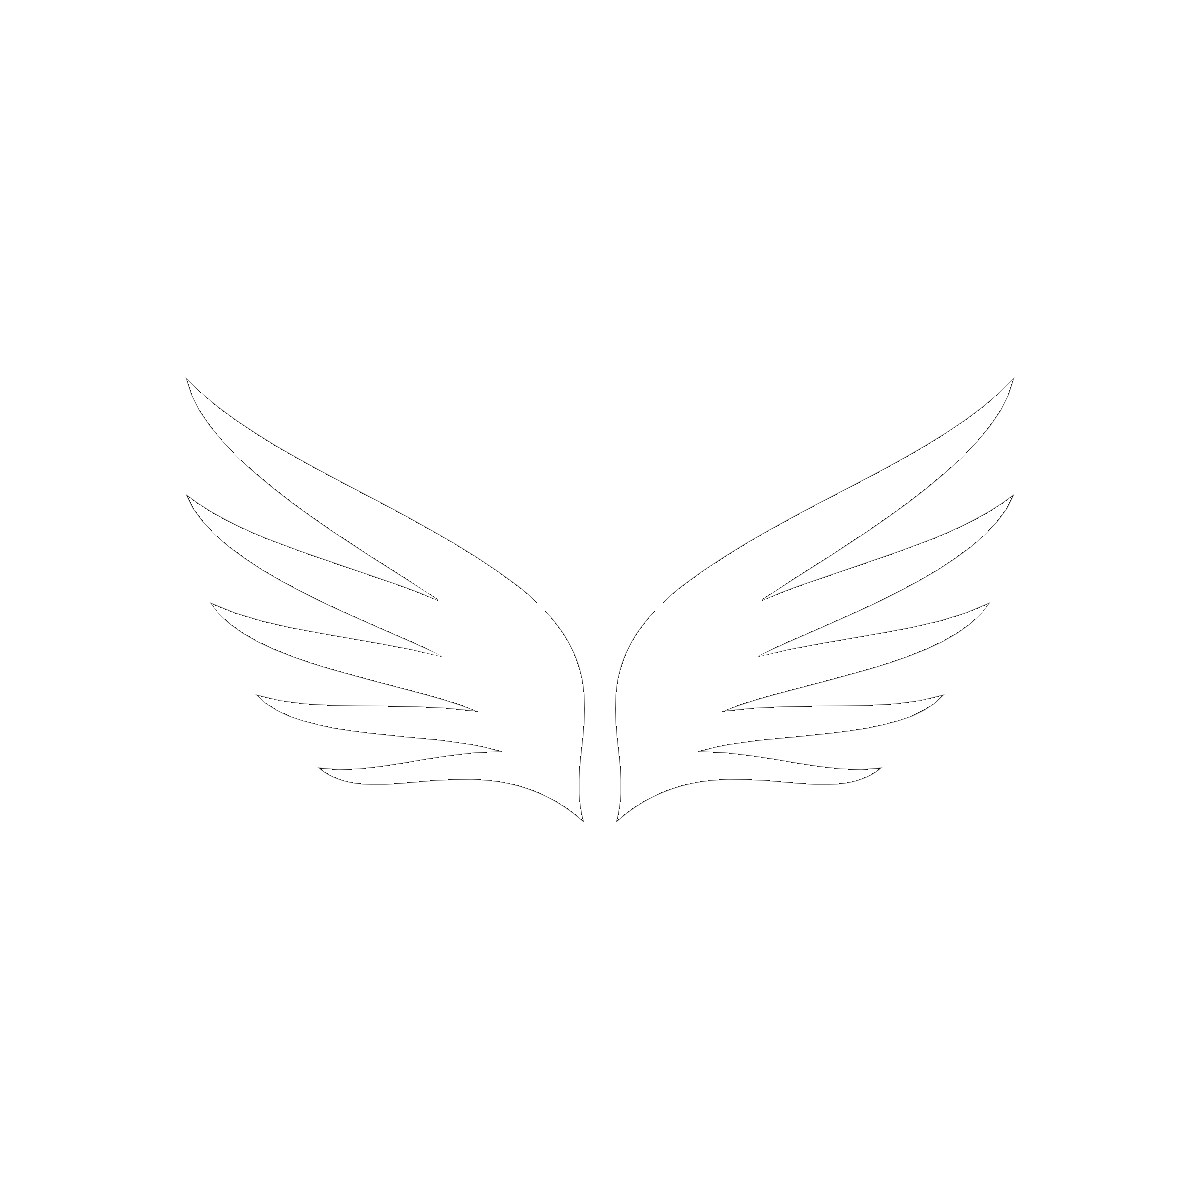 Symbol Wings and Flight